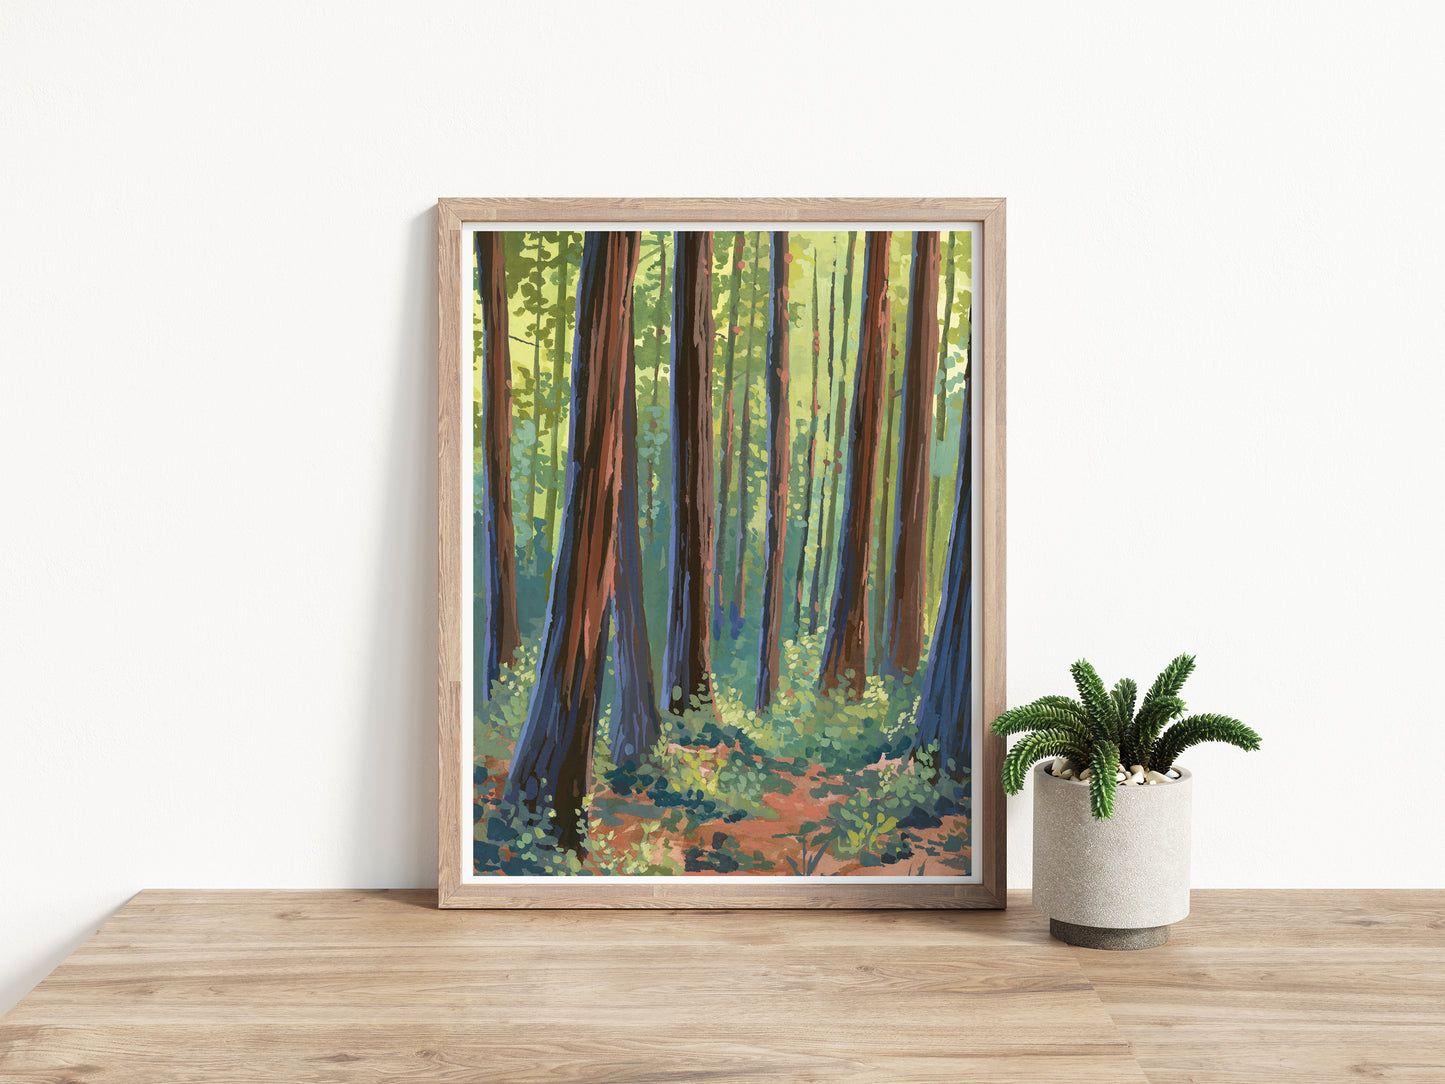 Framed Art print of redwood trees in California’s Muir Woods National Monument.